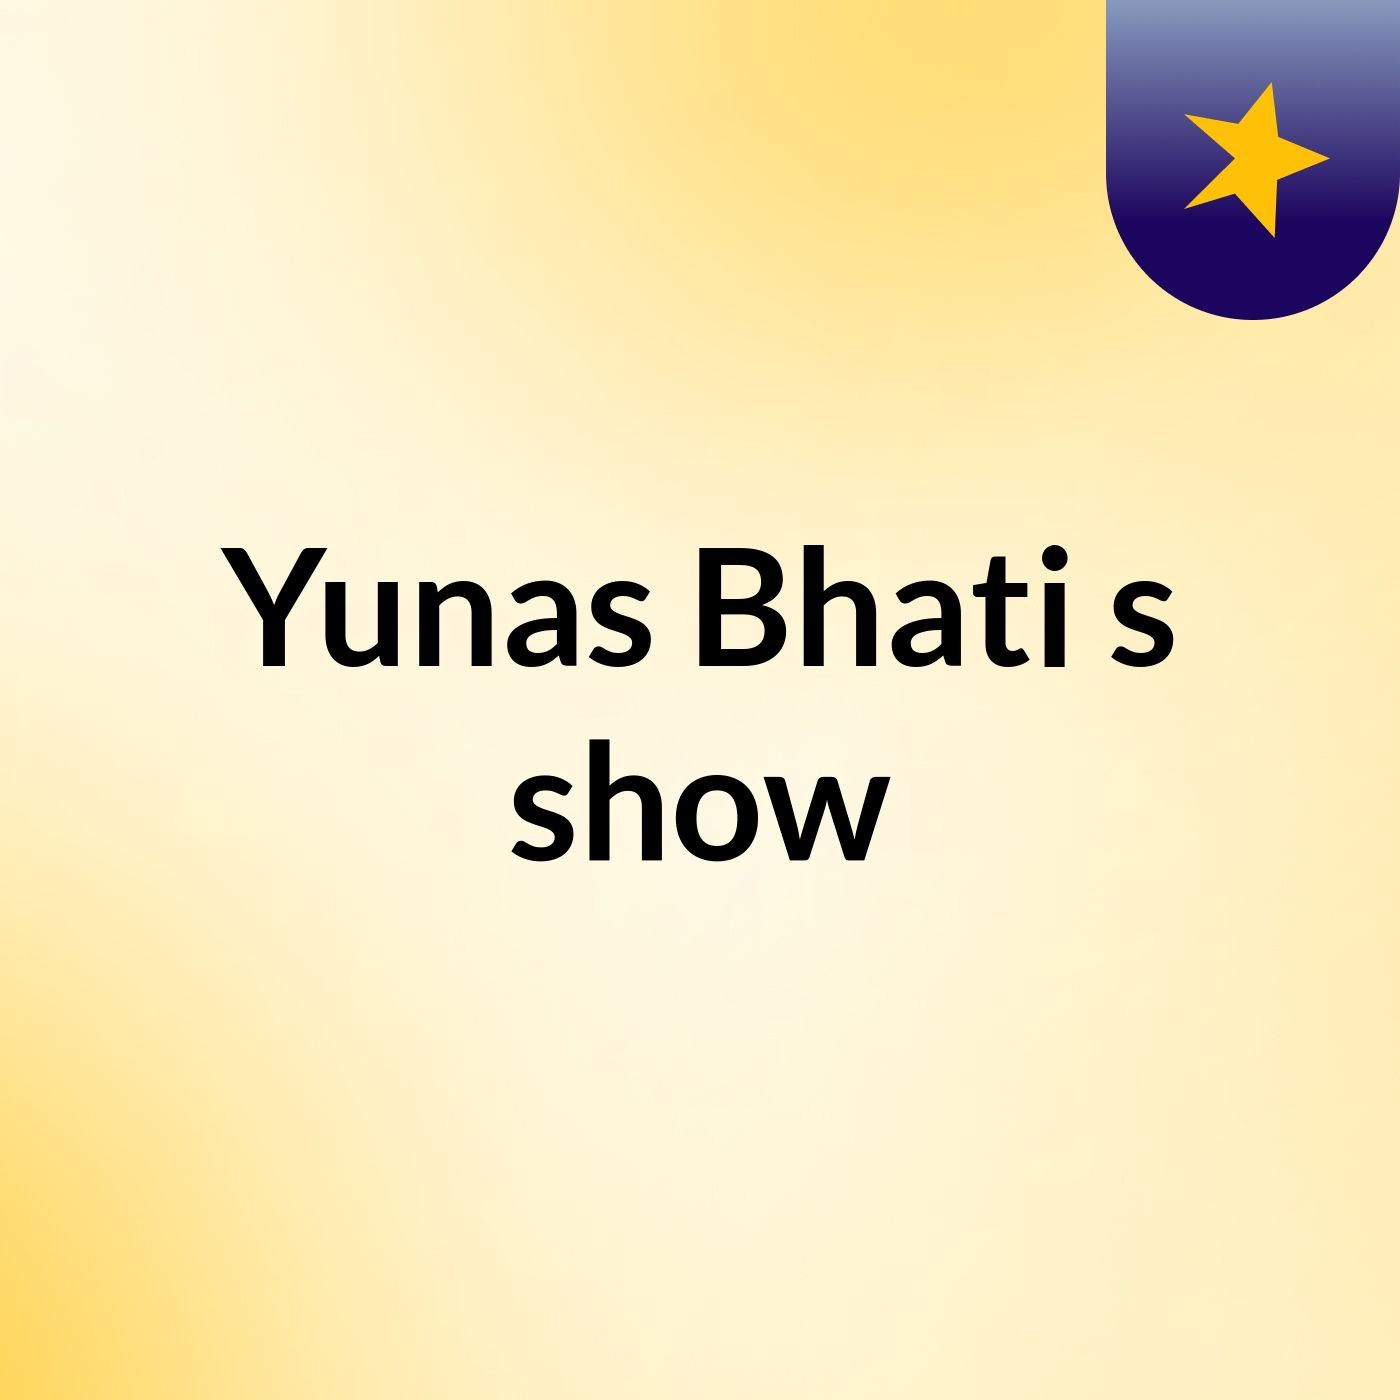 Yunas Bhati's show